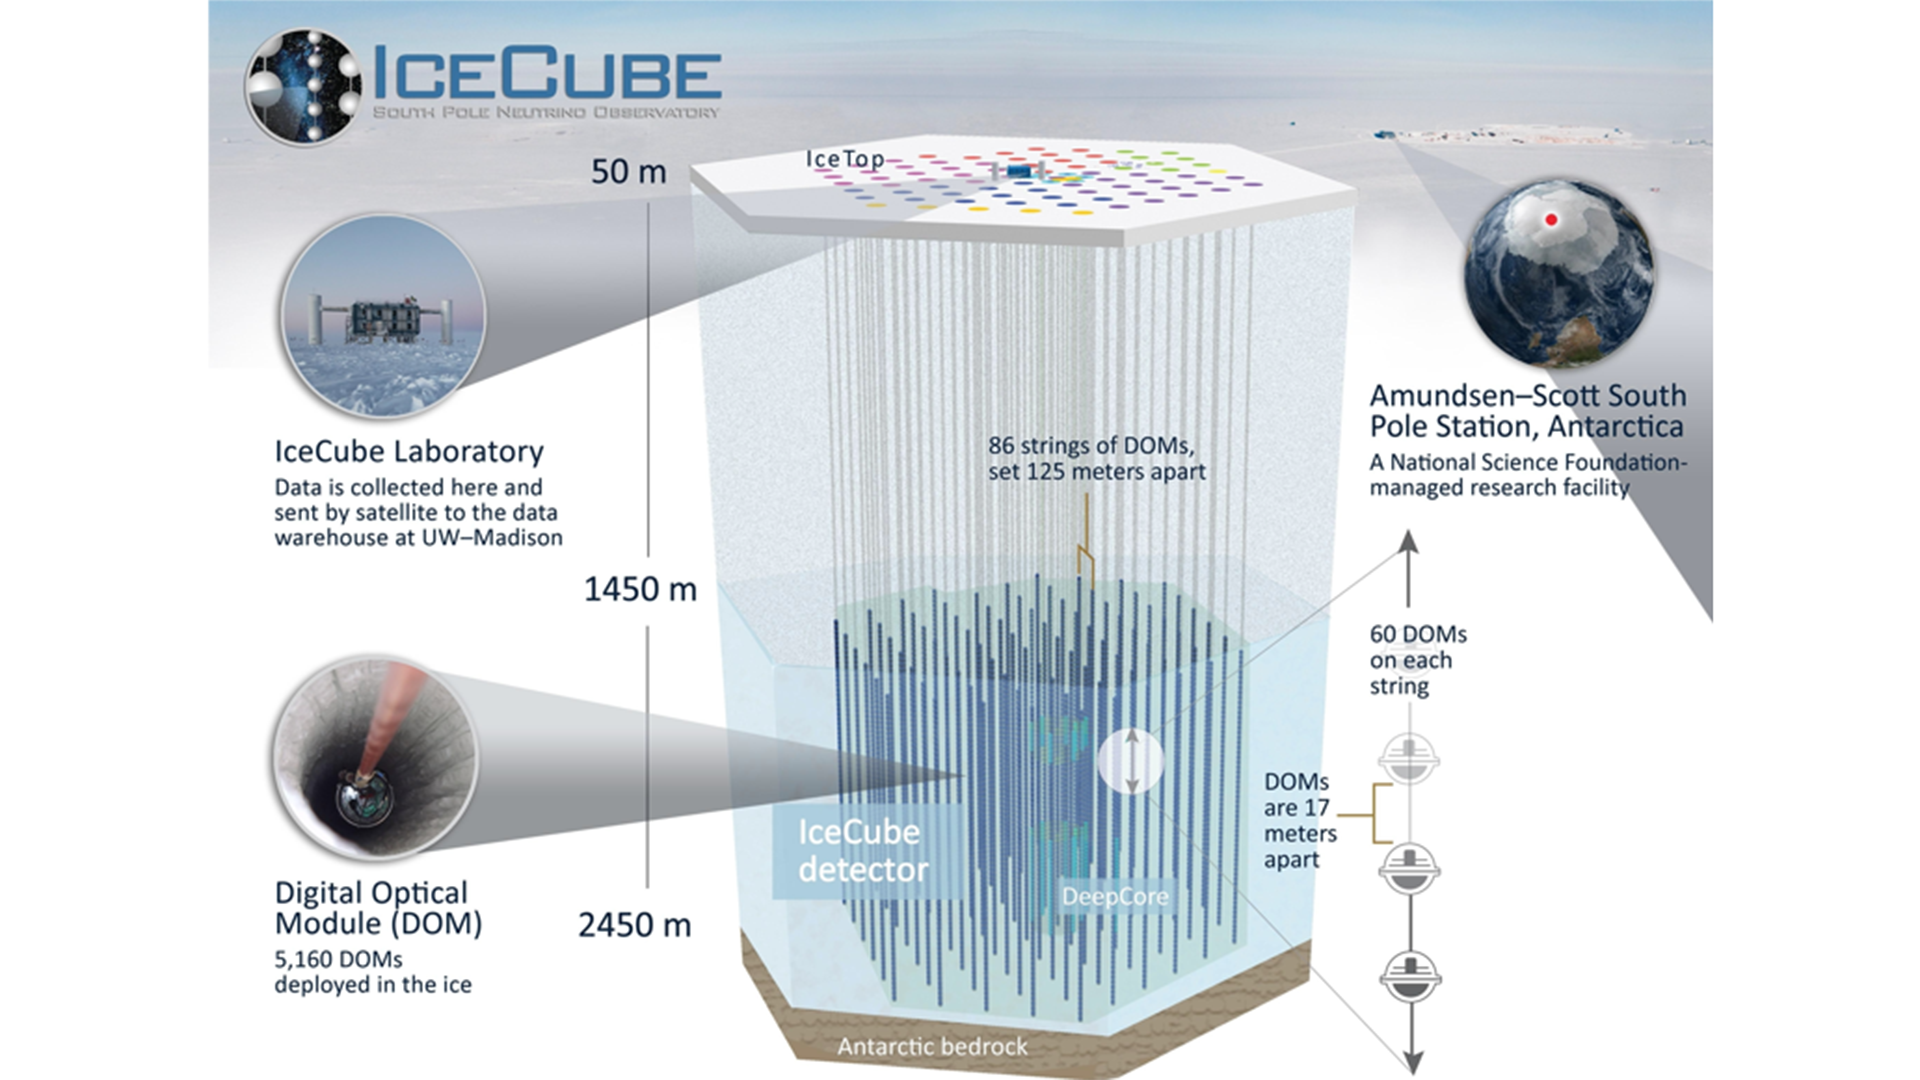 IceCube: Paving the way for next-generation neutrino discovery